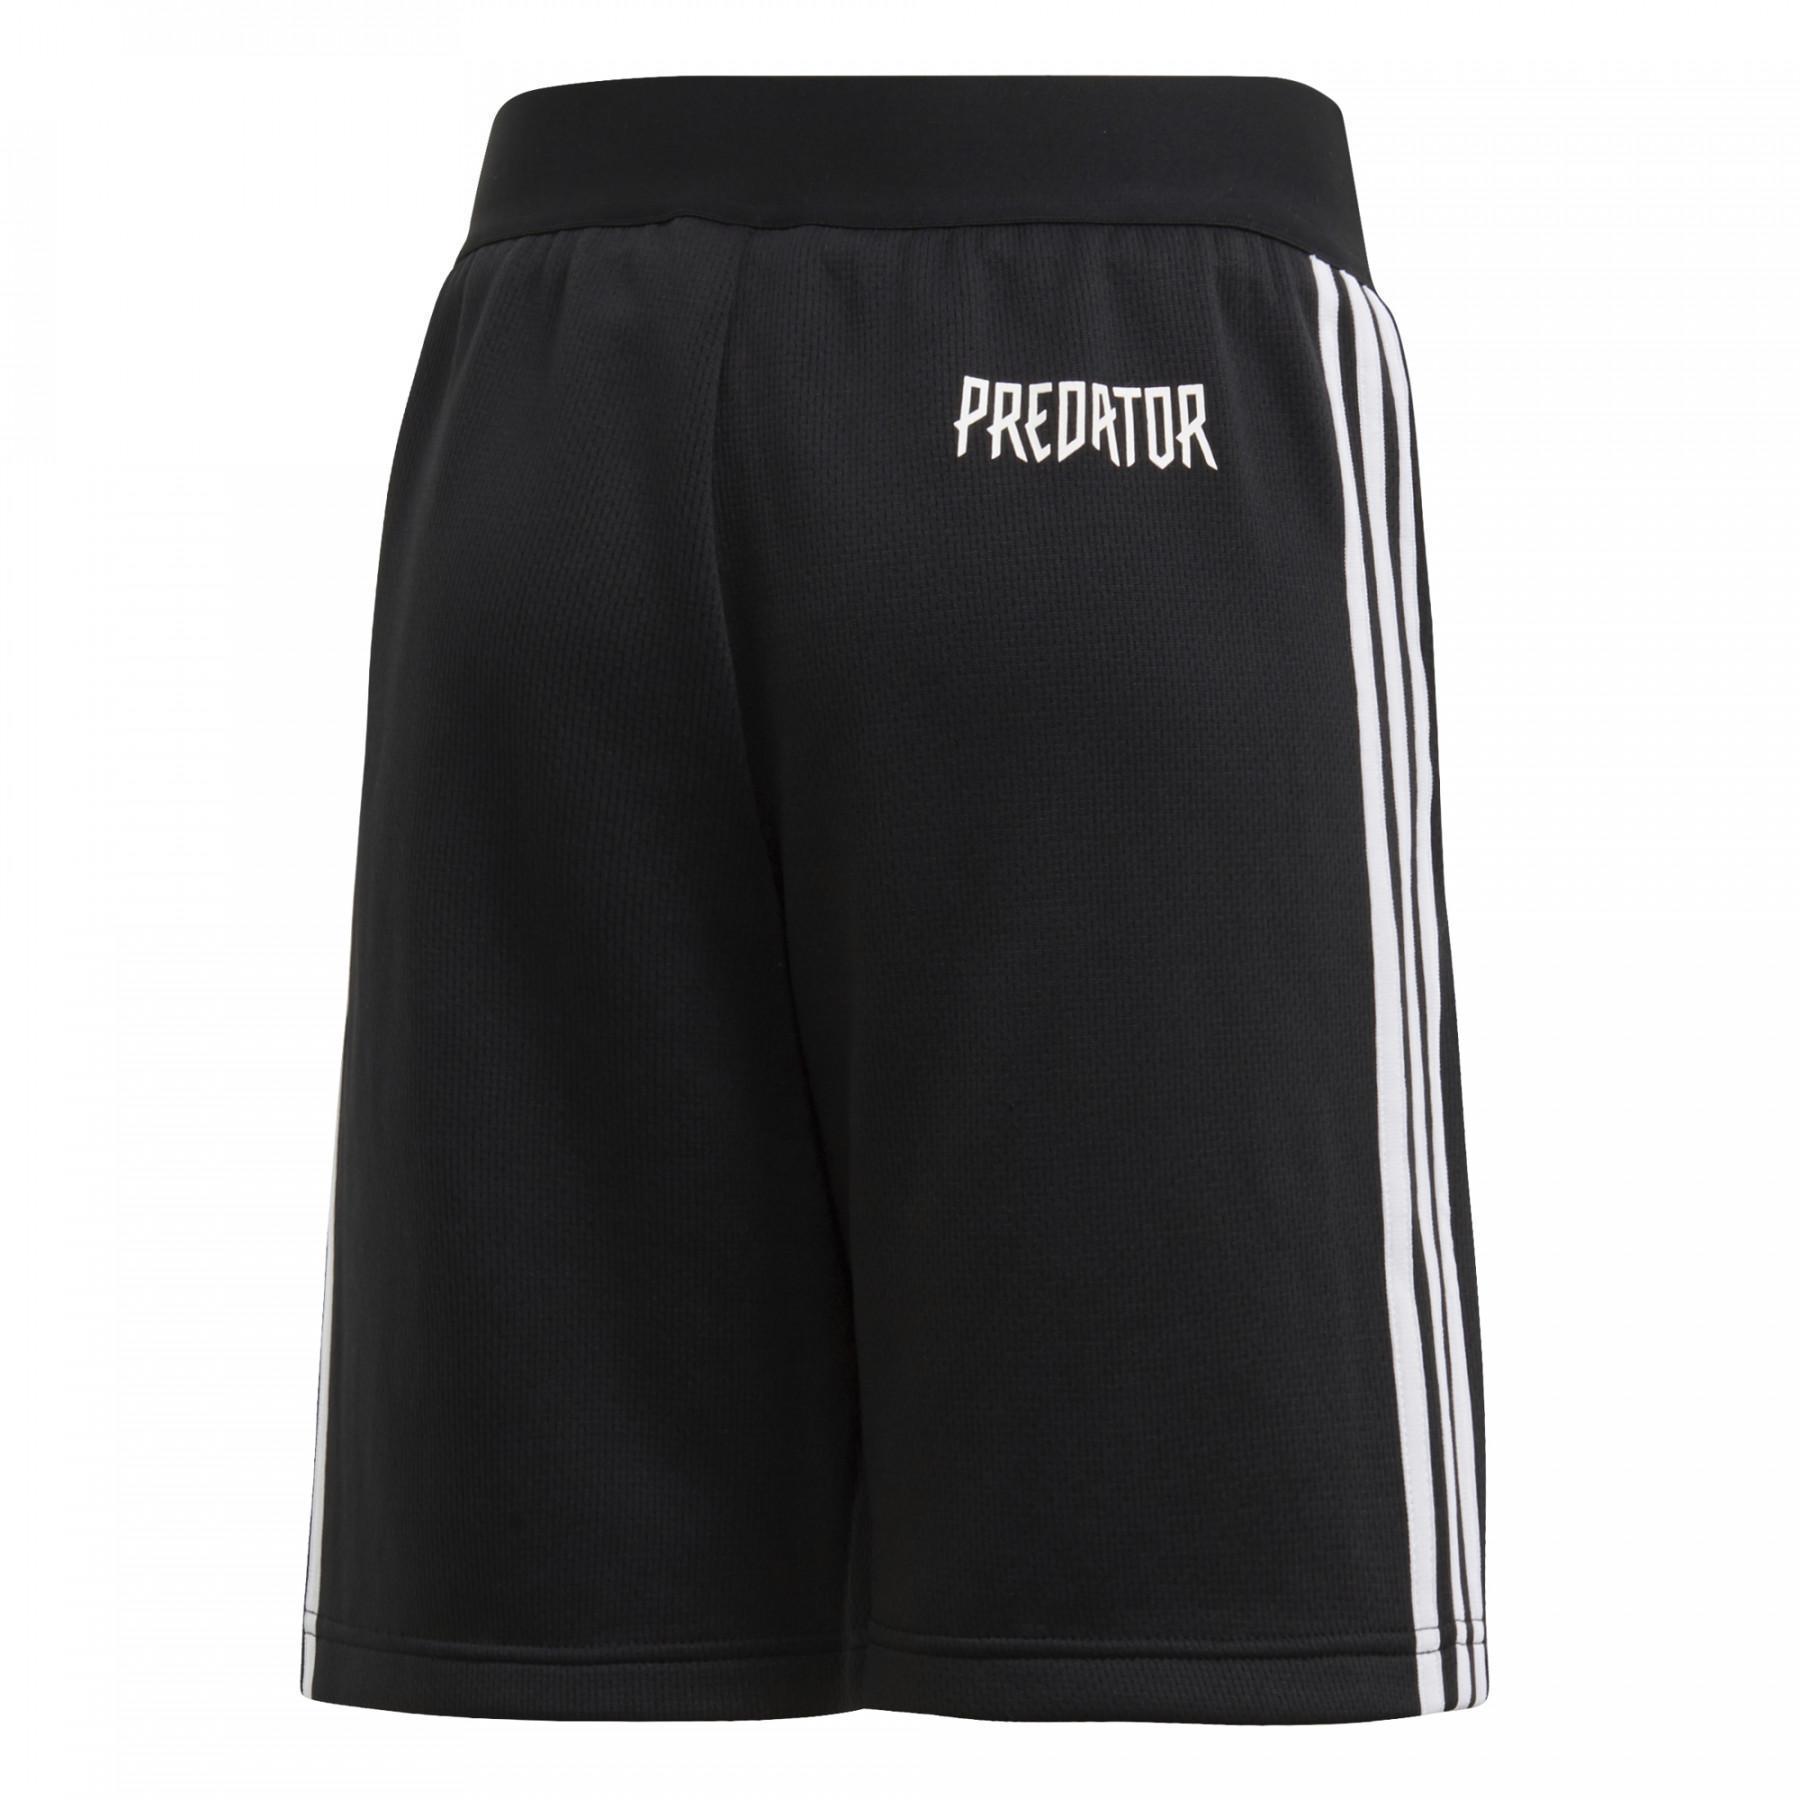 Kinder shorts adidas Preadator 3-Stripes